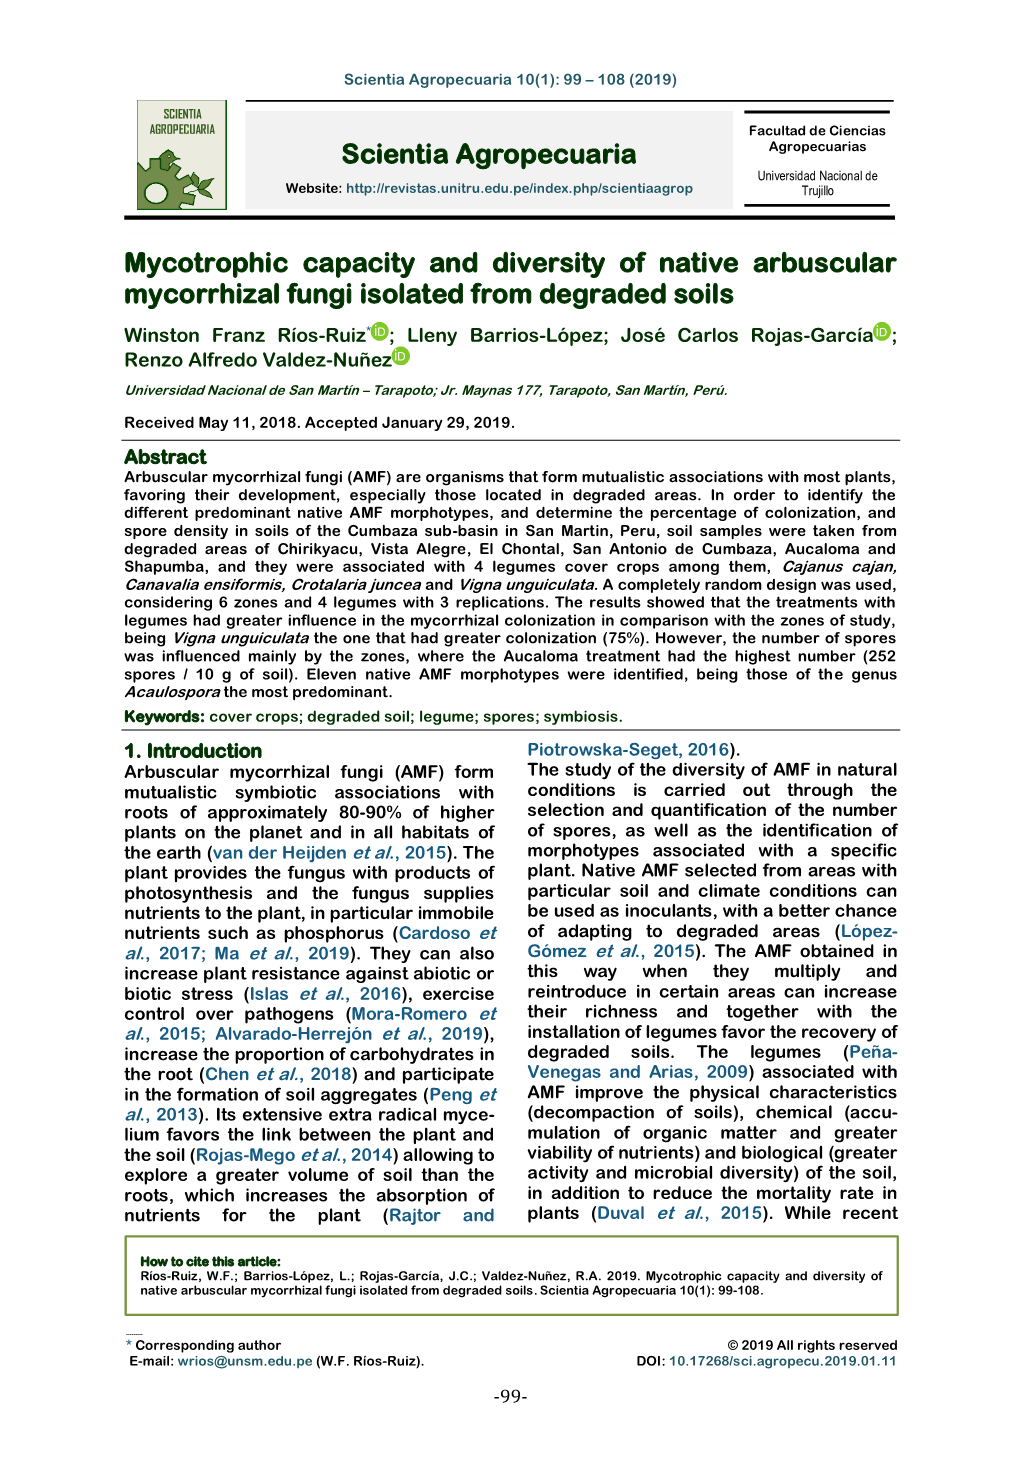 Mycotrophic Capacity and Diversity of Native Arbuscular Mycorrhizal Fungi Isolated from Degraded Soils Scientia Agropecuaria